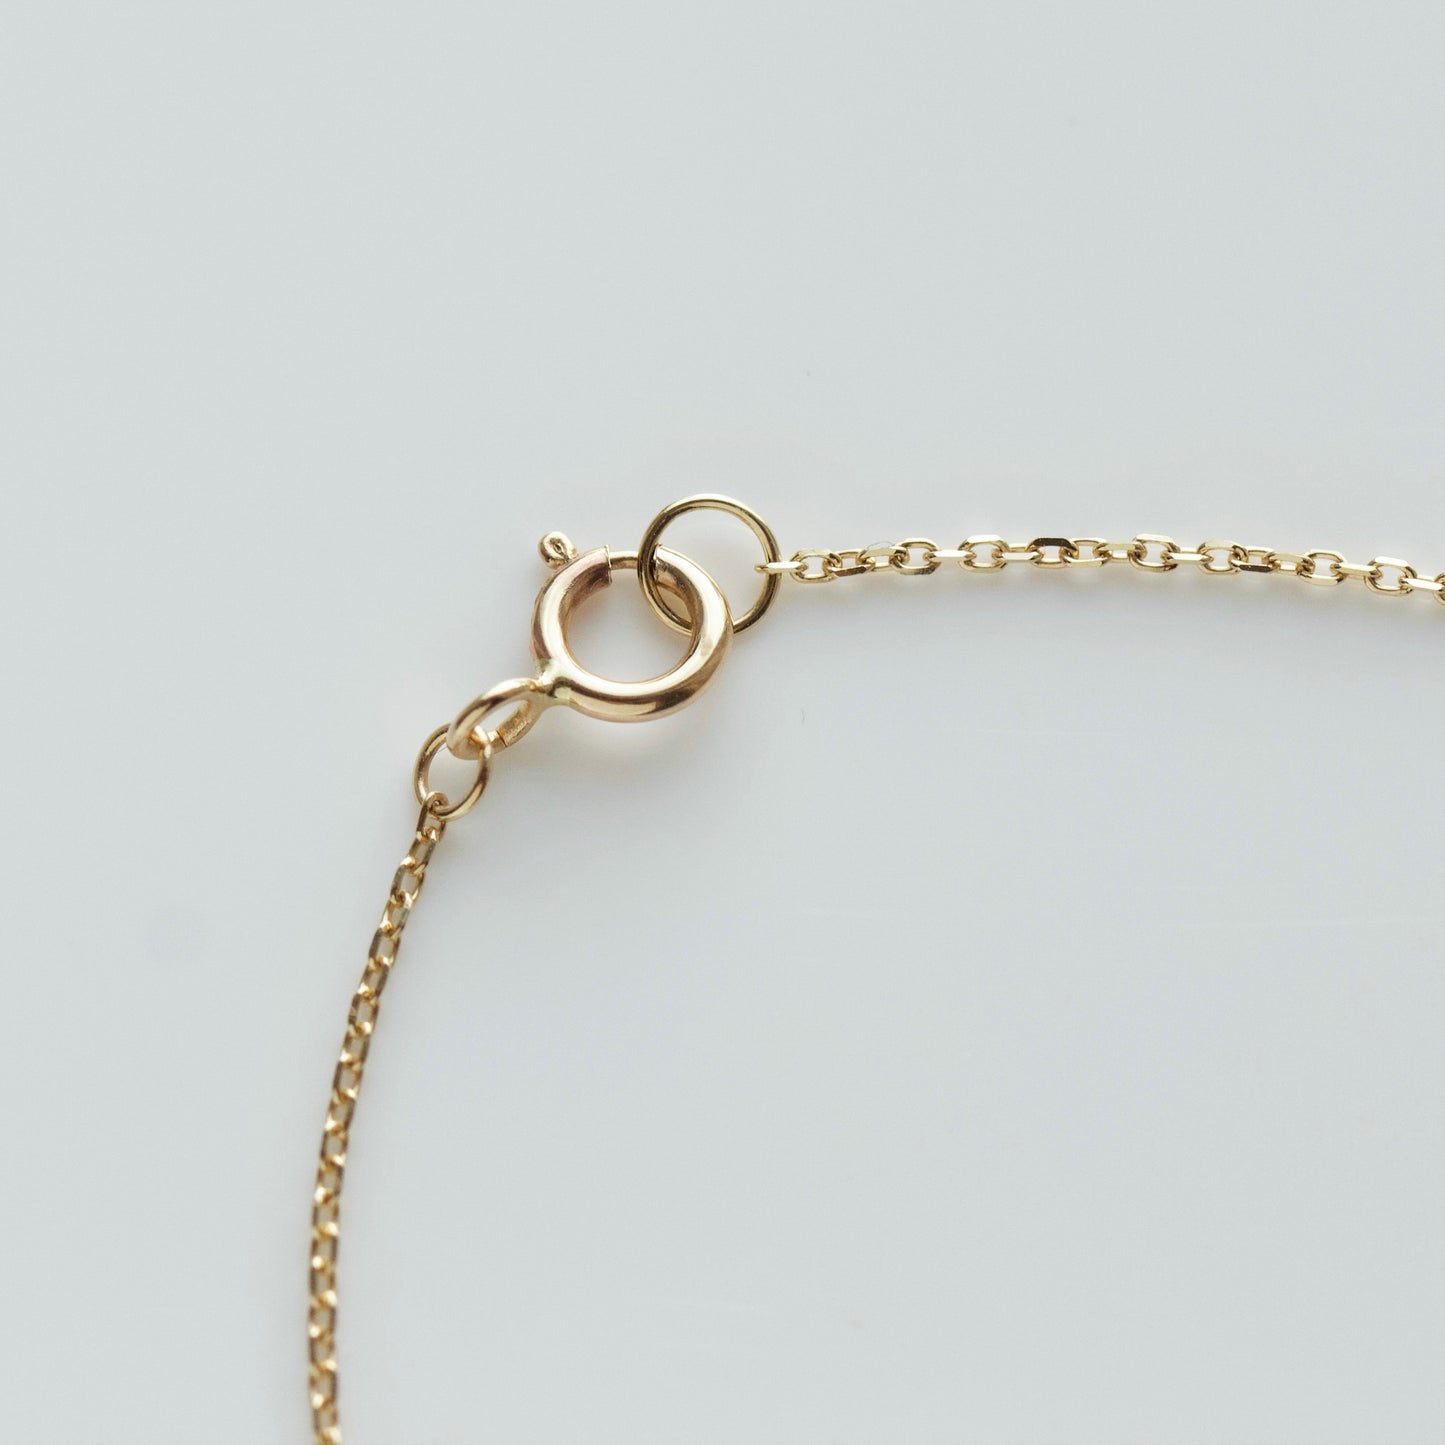 carrie elizabeth opal necklace in 9k solid gold